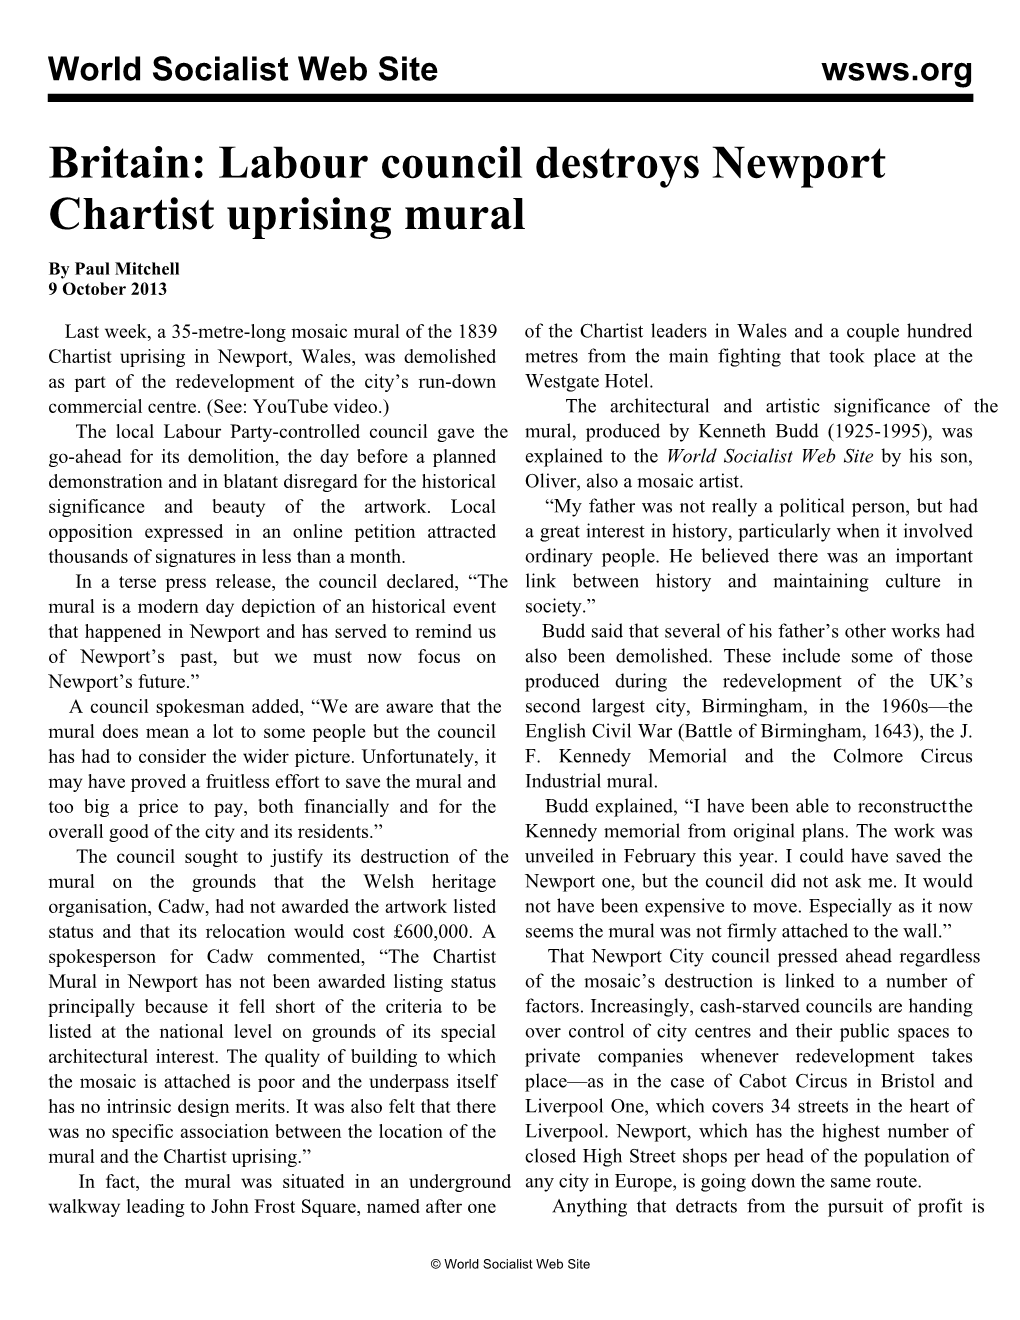 Britain: Labour Council Destroys Newport Chartist Uprising Mural